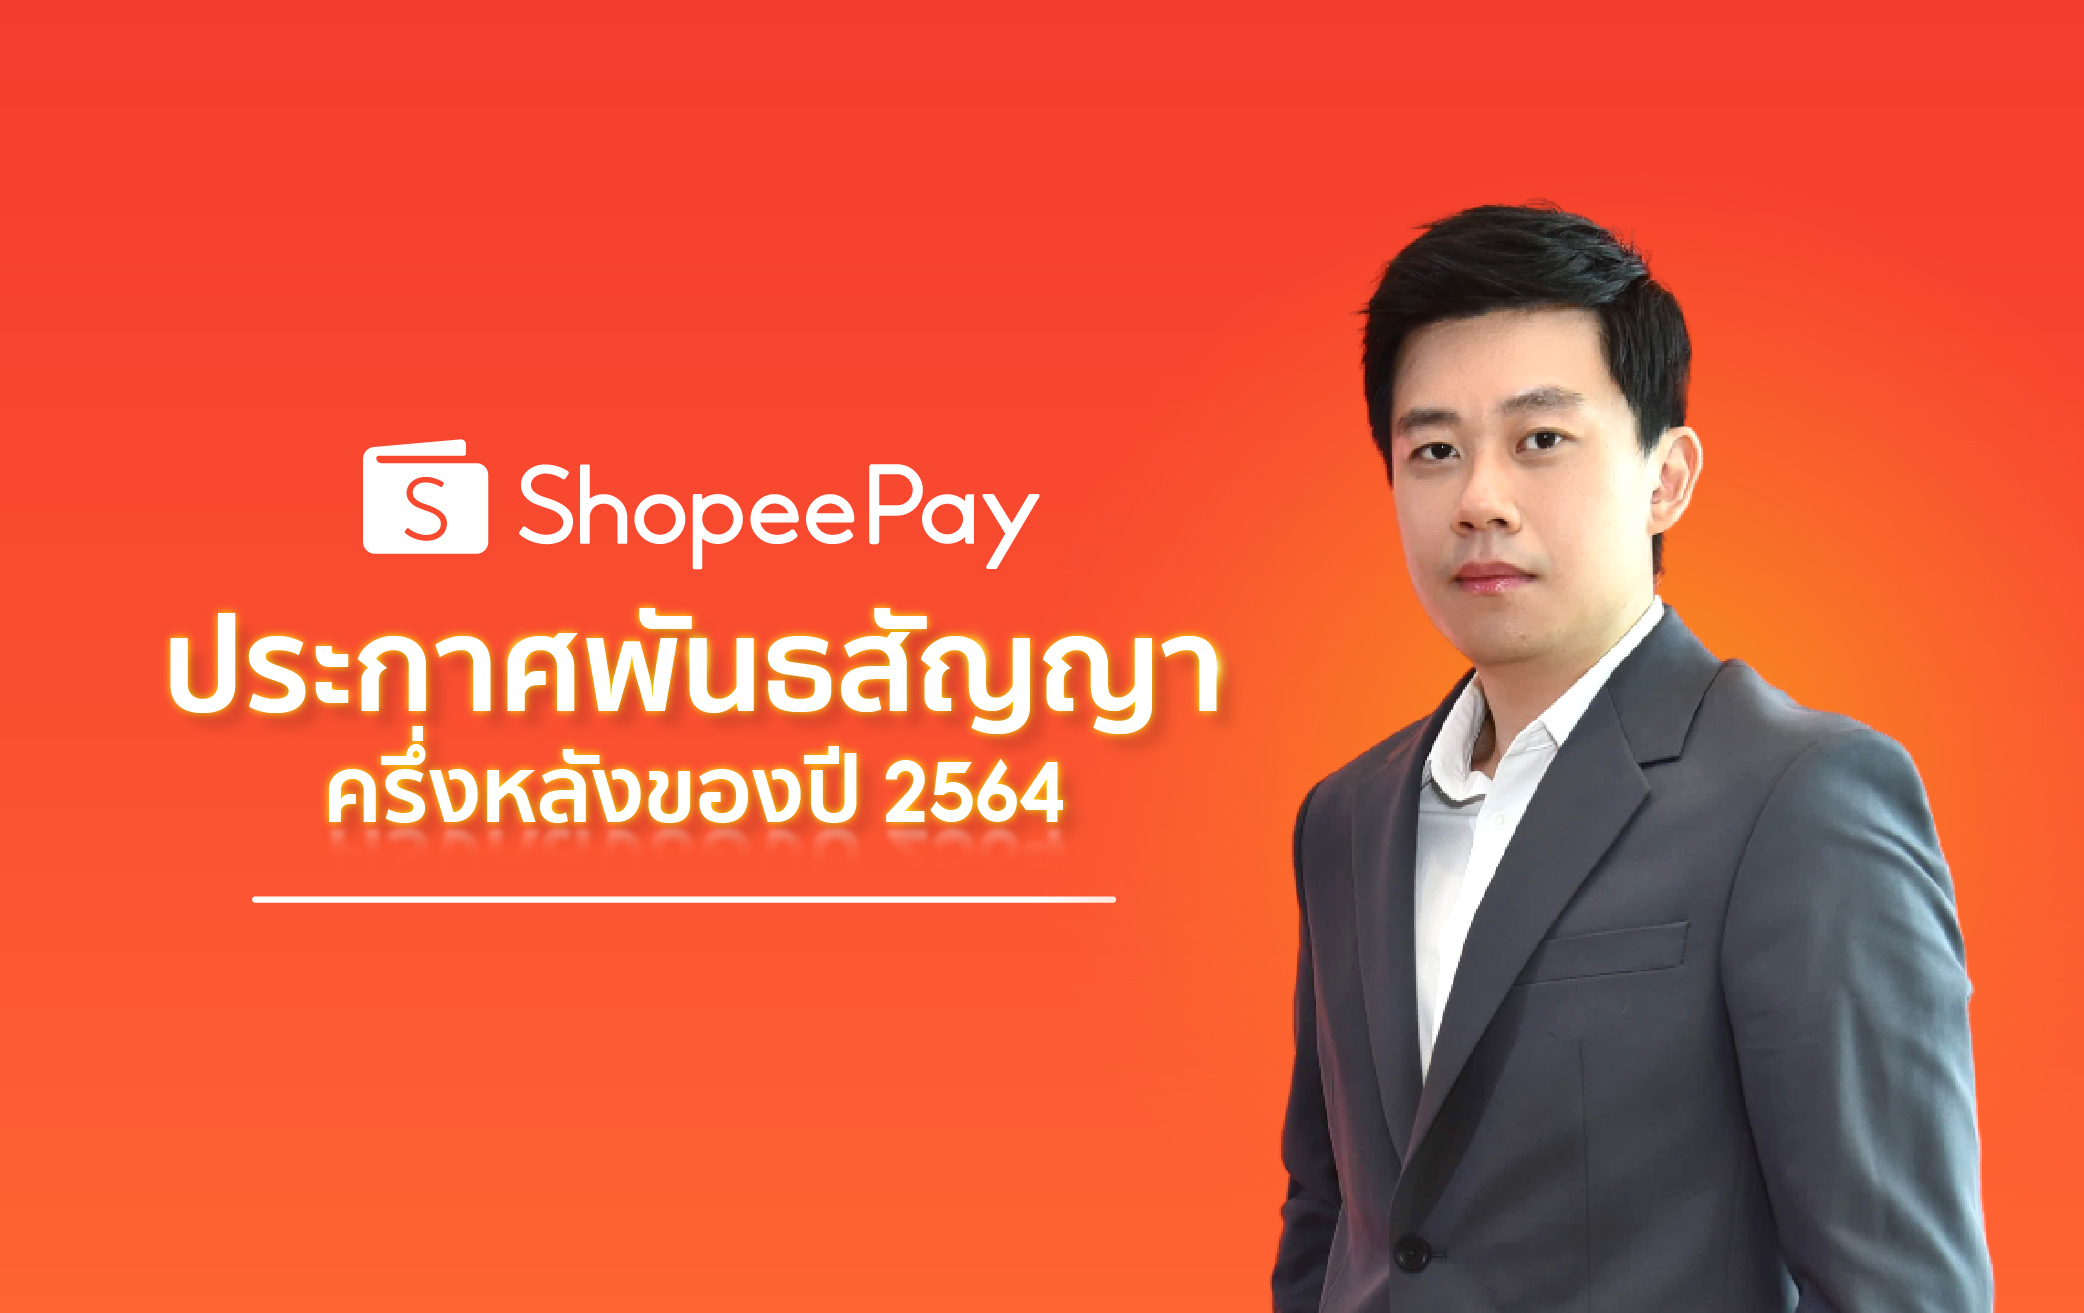 ShopeePay กับอนาคตขับเคลื่อน Mobile Wallet ในประเทศไทย